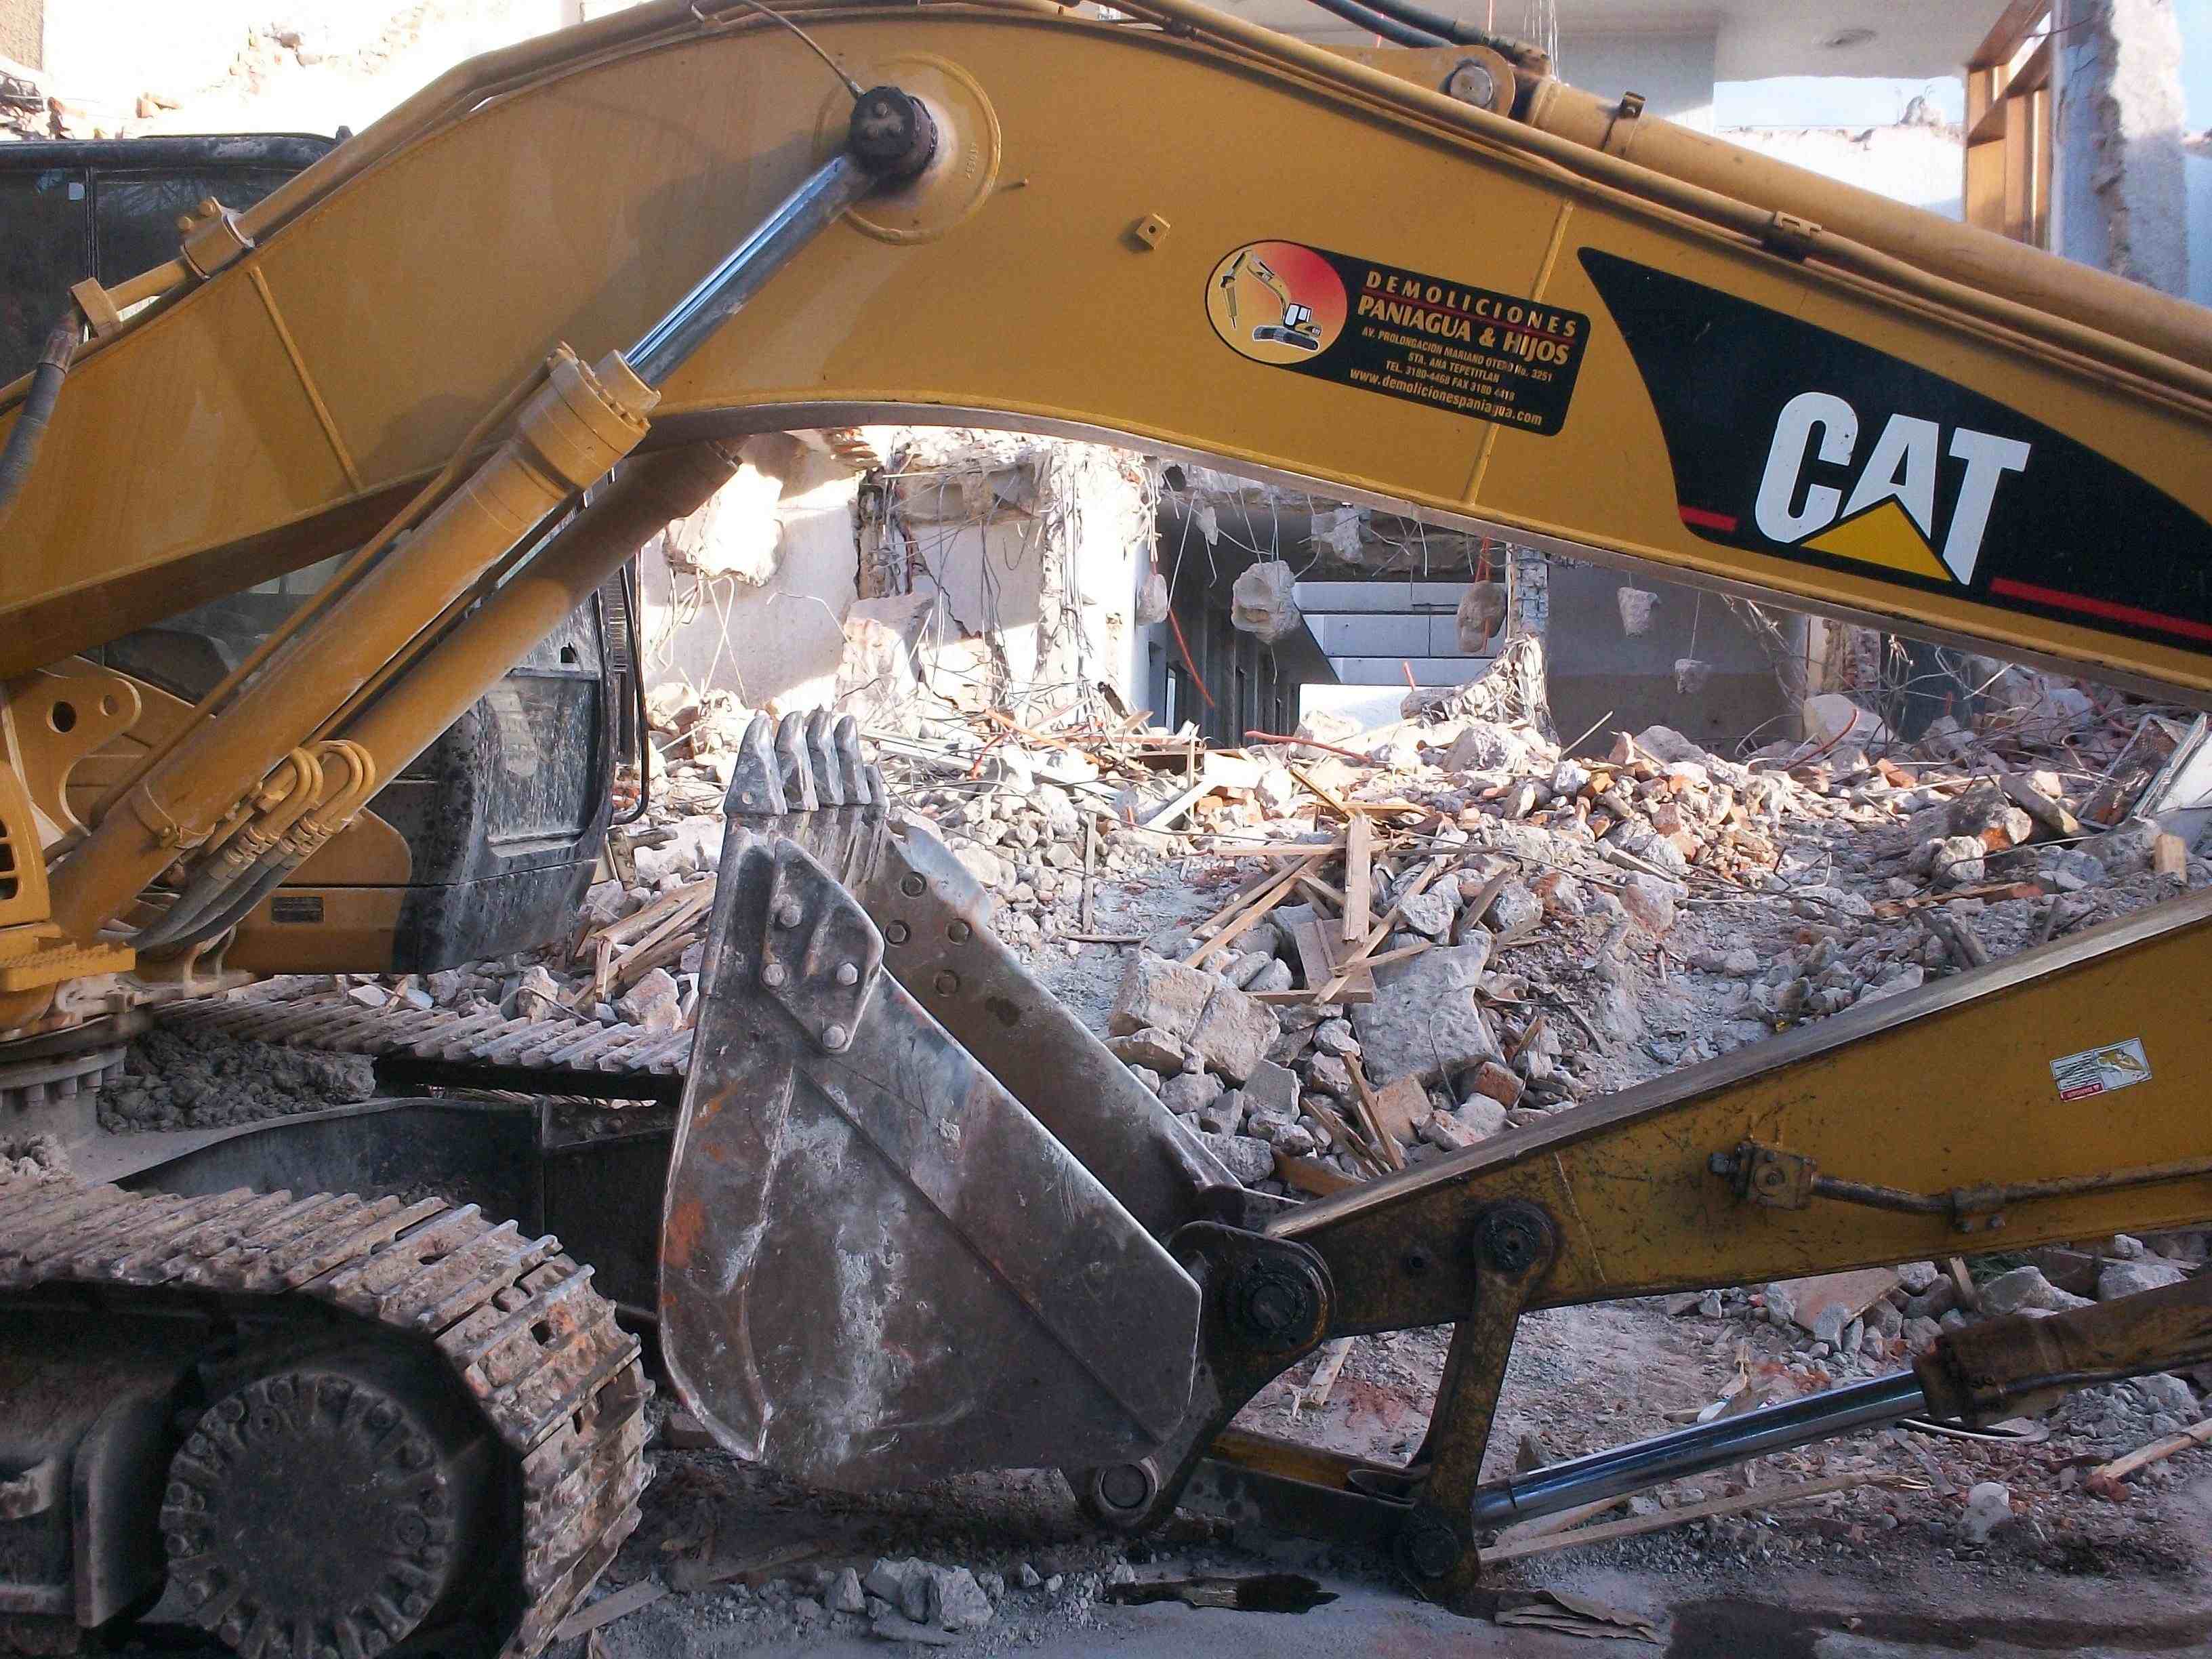 Demolition of buildings presents many dangers.